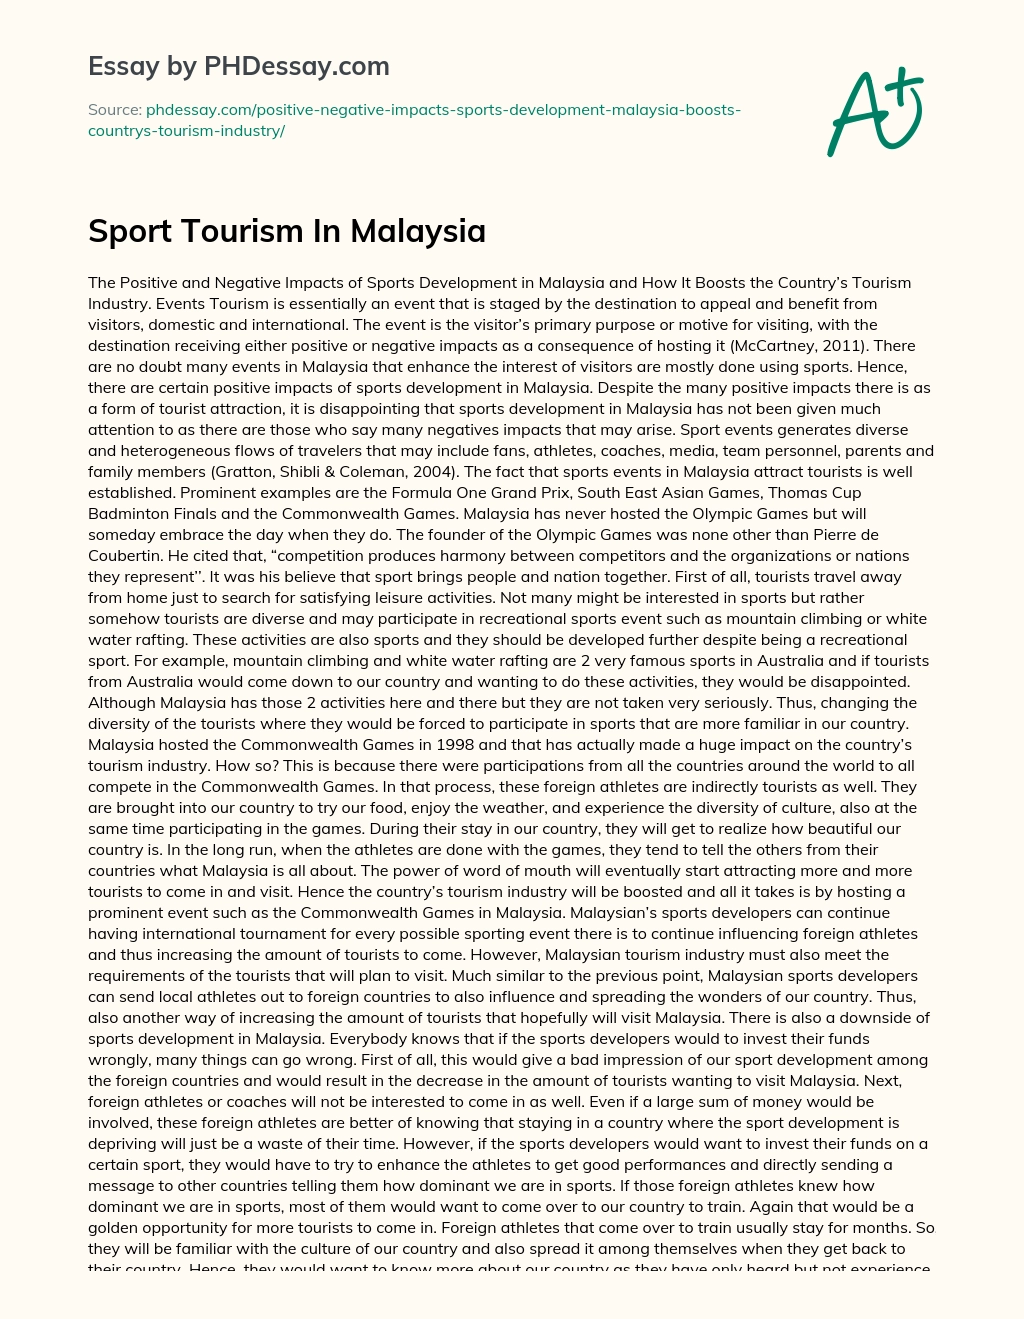 Sport Tourism In Malaysia essay